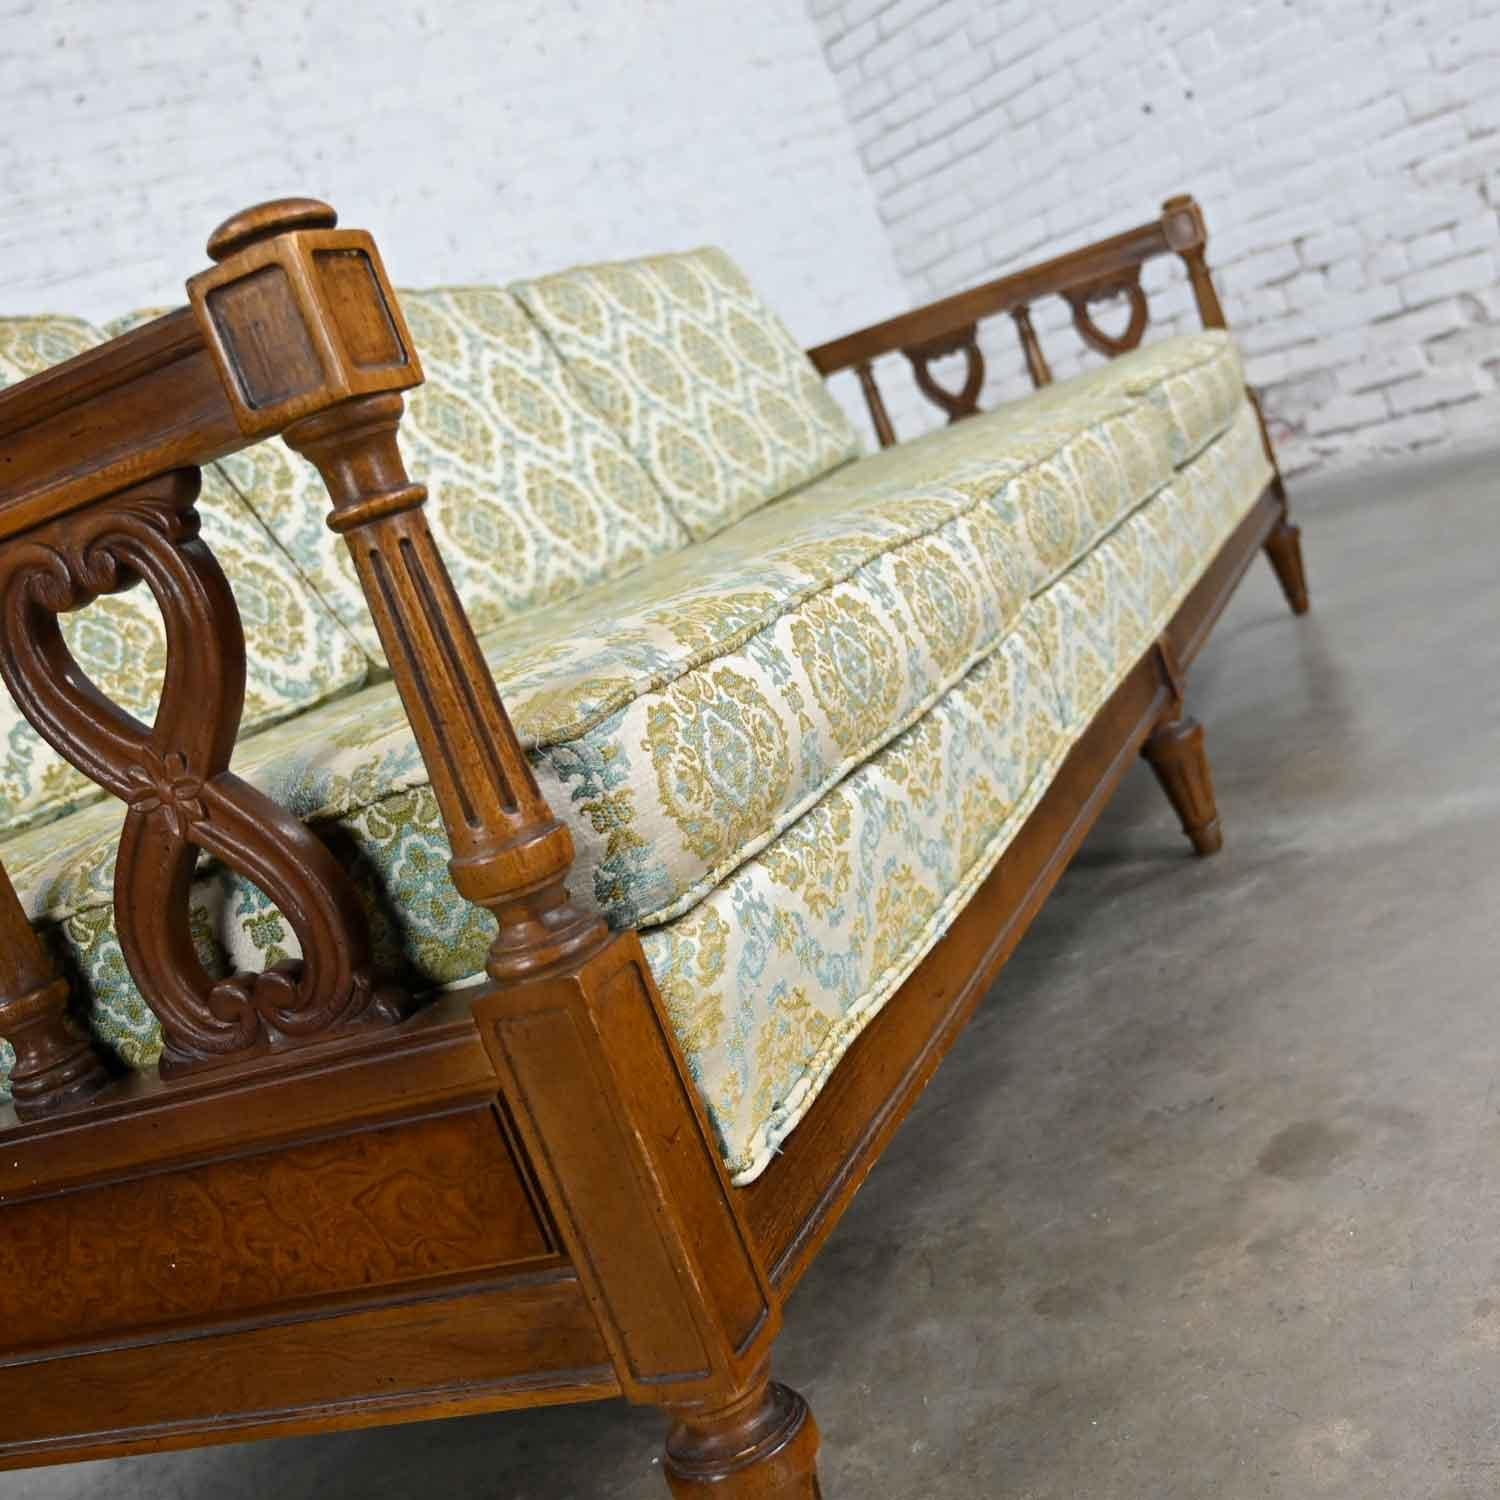 20th Century Vintage Mediterranean Spanish Revival Style Sofa Wood Details by American Furn